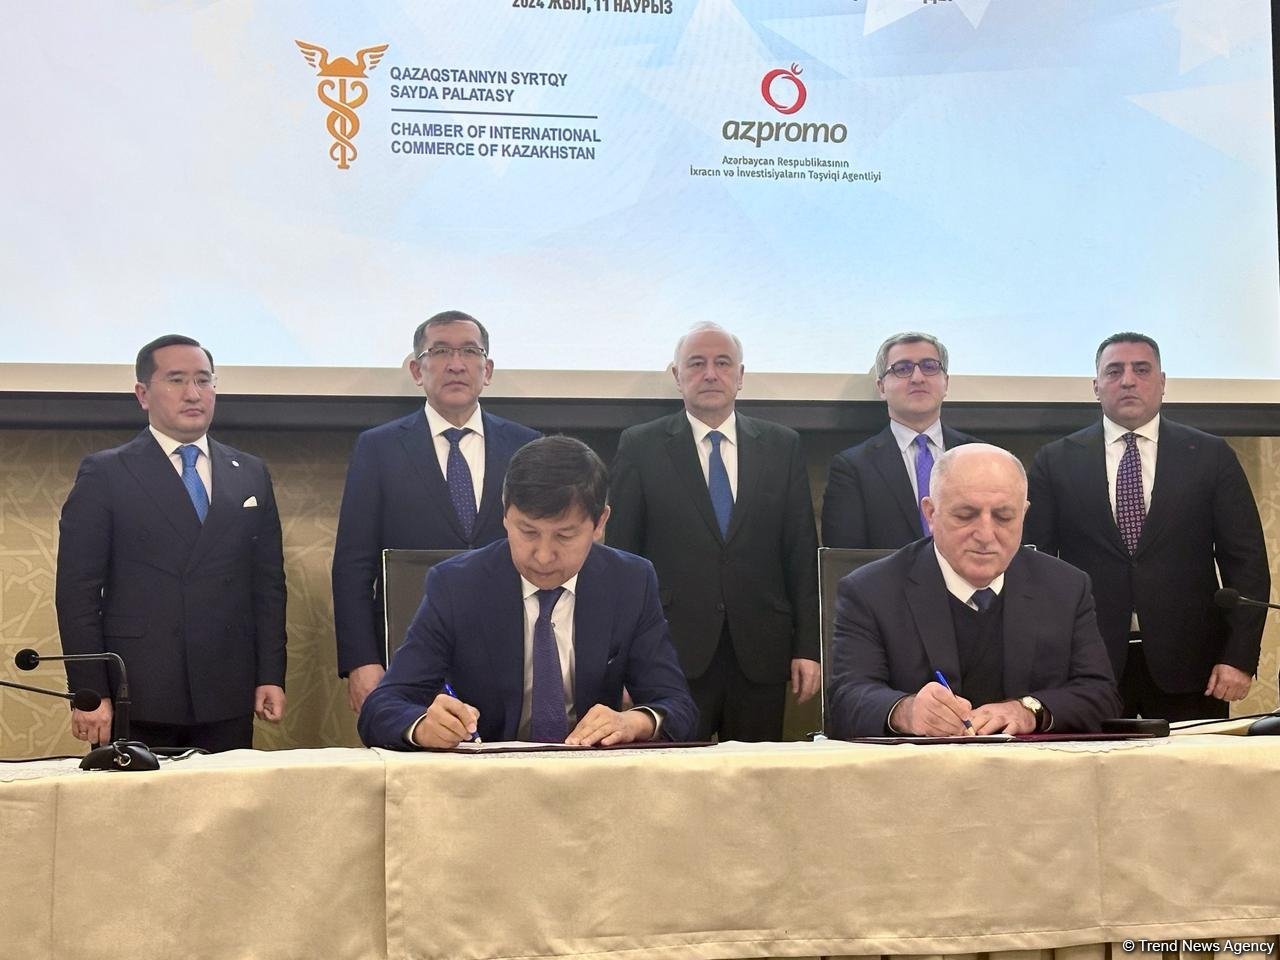 Azerbaijani, Kazakh business organizations sign memorandum of understanding (PHOTO)